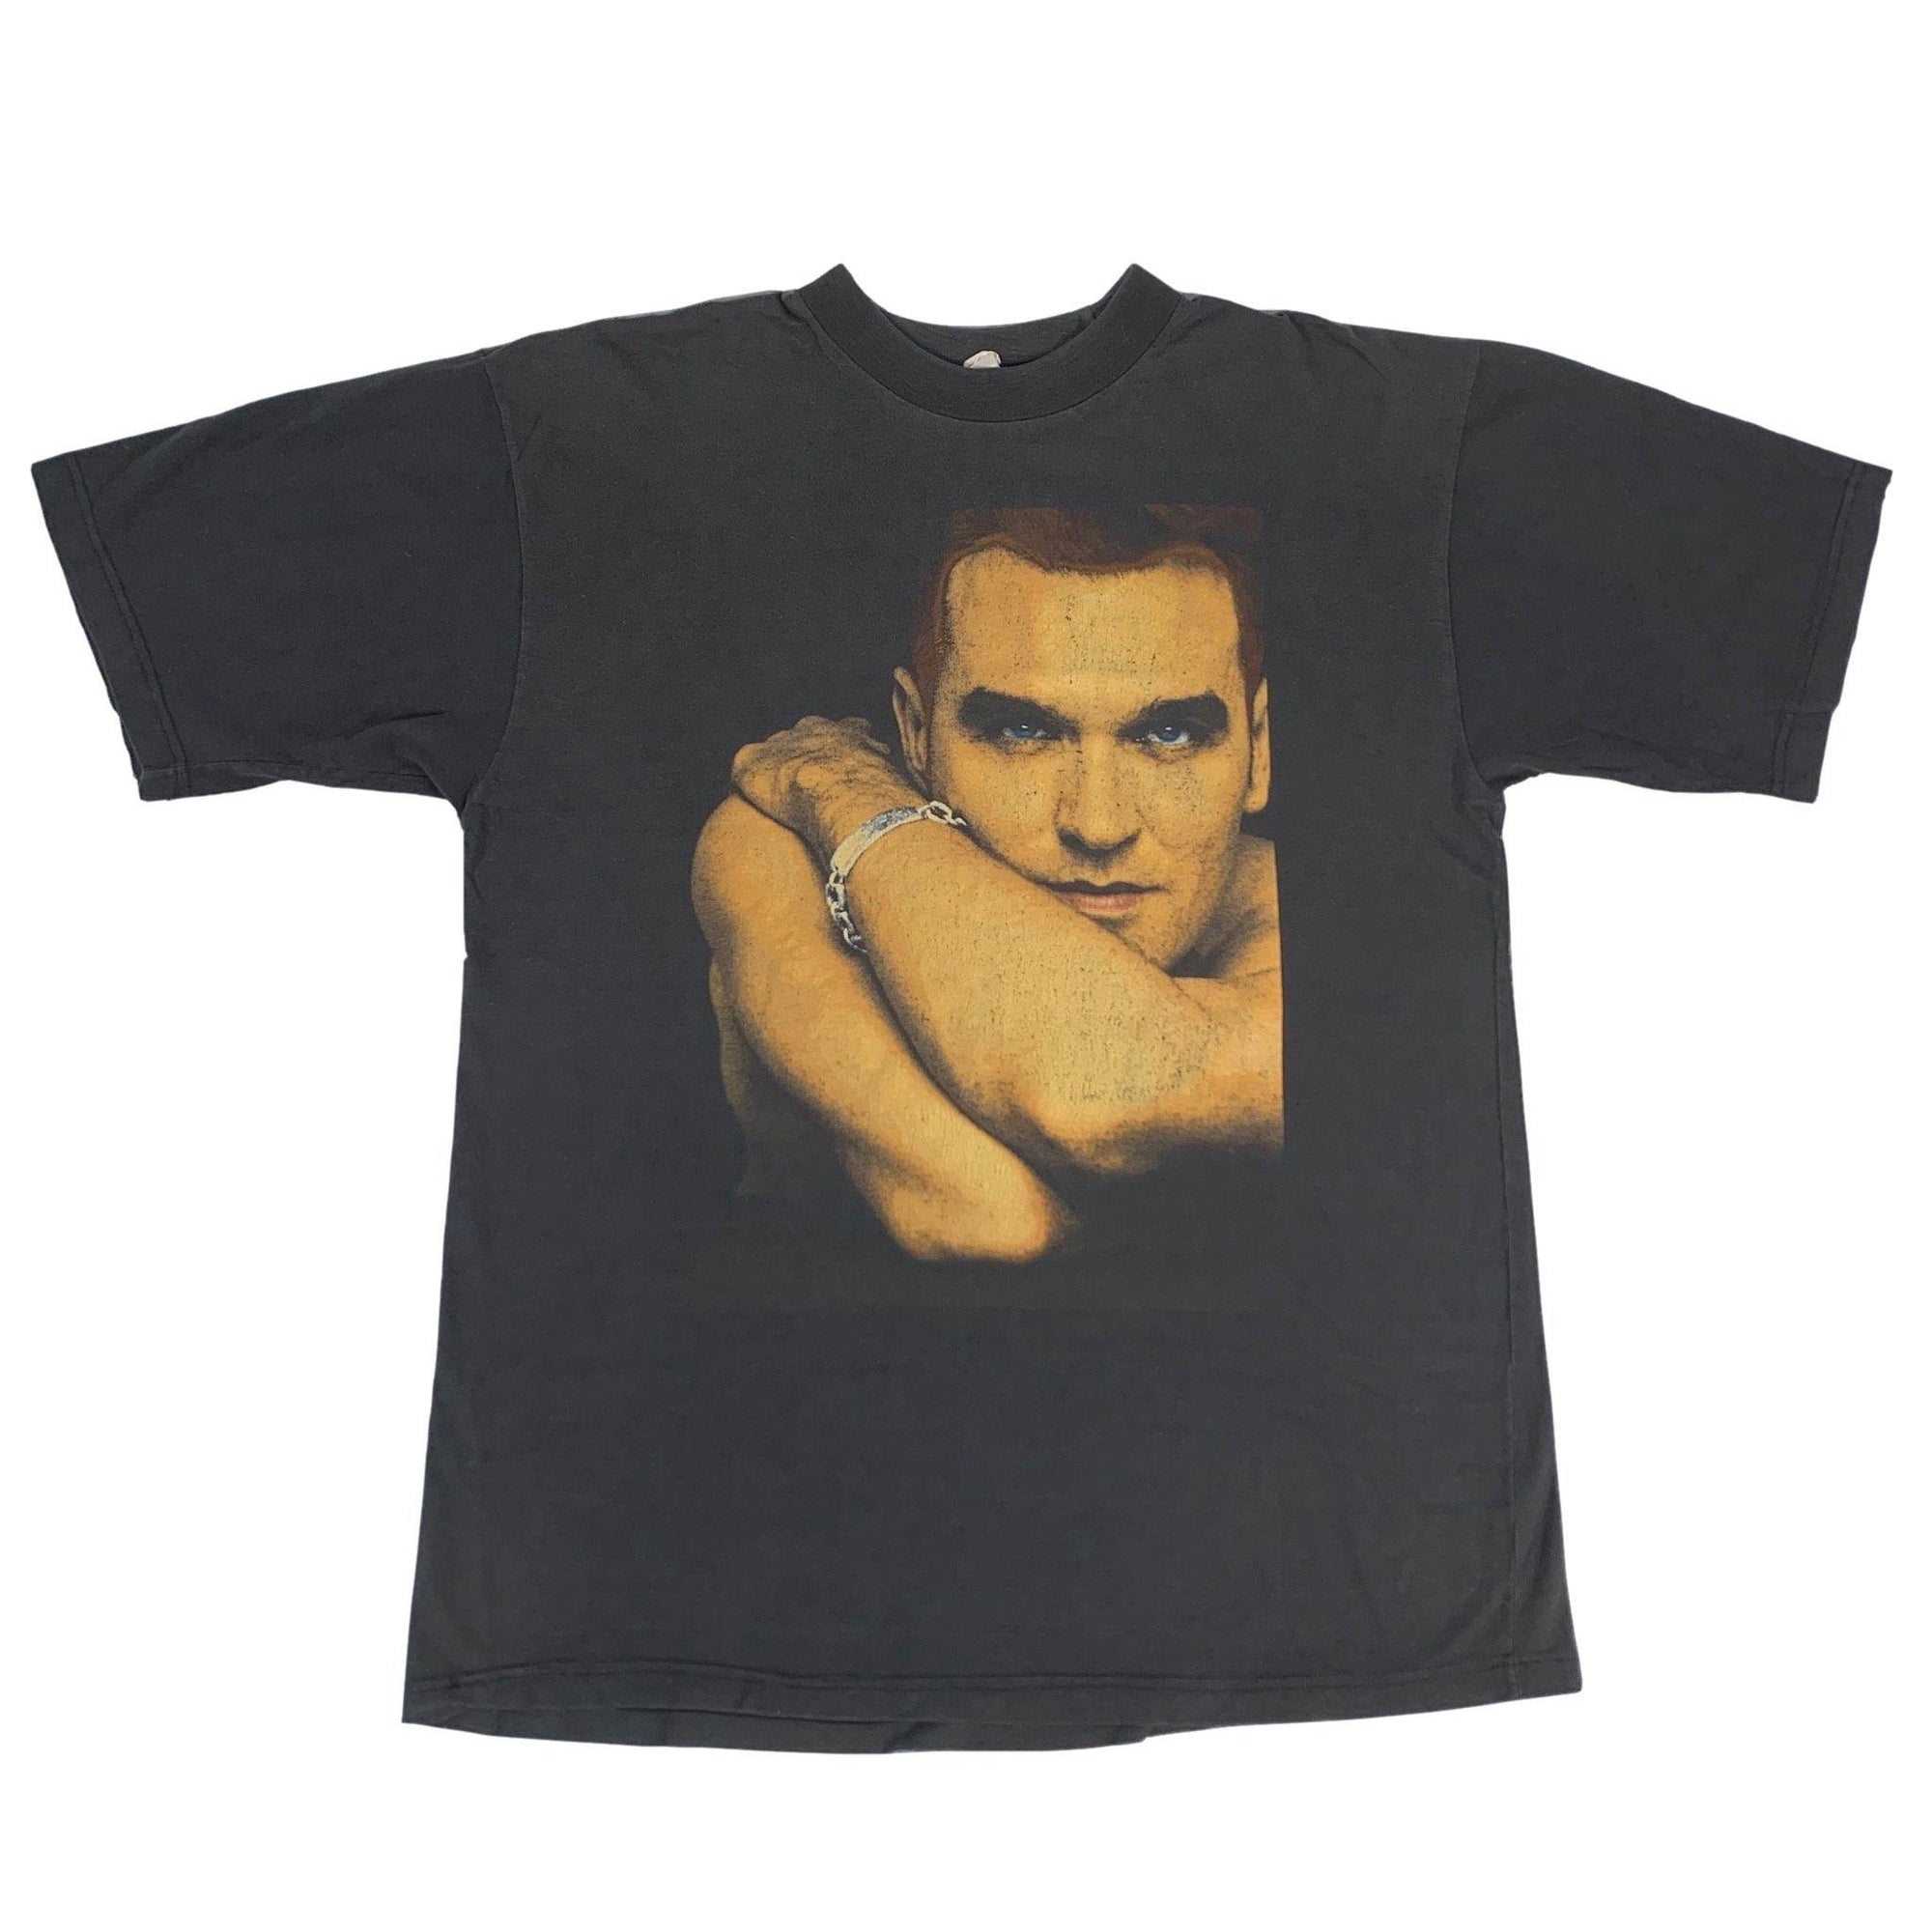 Vintage Morrissey "Glamorous Glue" Tour T-Shirt - jointcustodydc